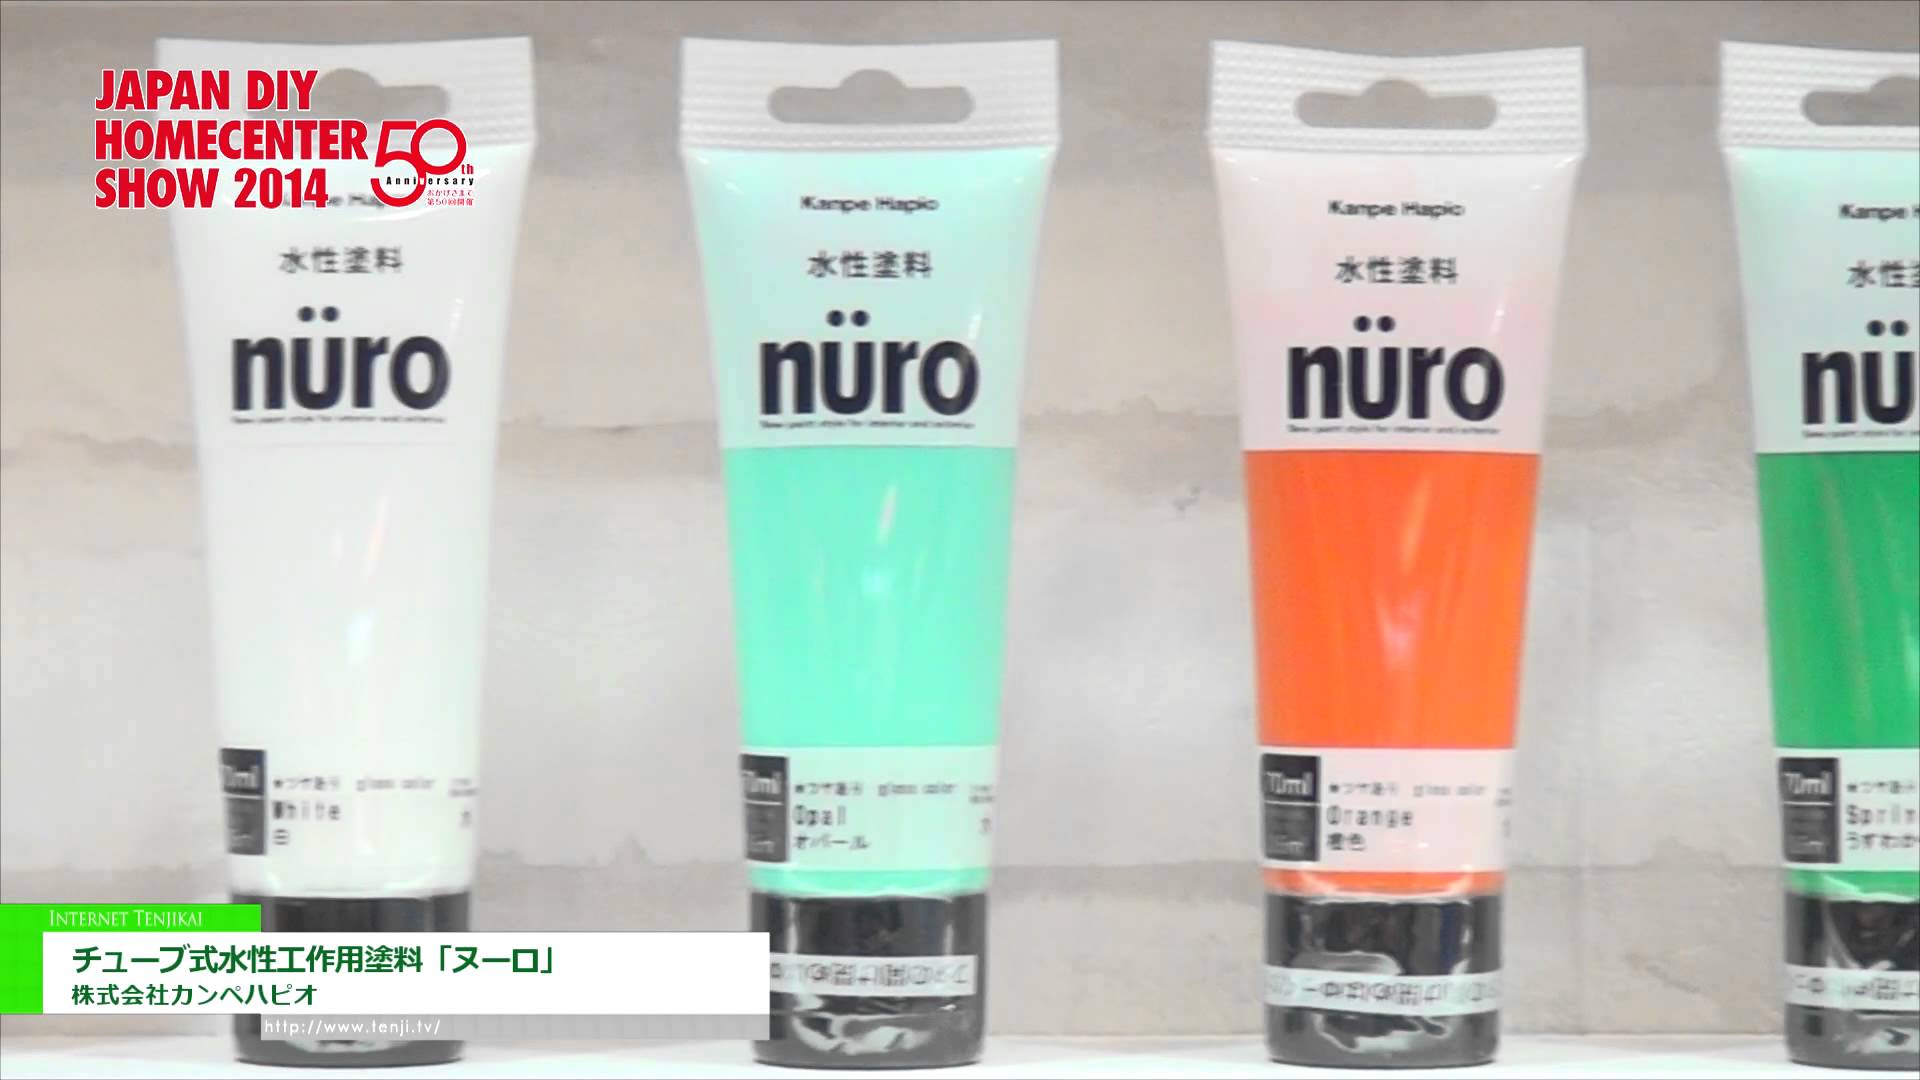 [JAPAN DIY HOMECENTER SHOW 2014] チューブ式水性工作用塗料「ヌーロ」 - 株式会社カンペハピオ